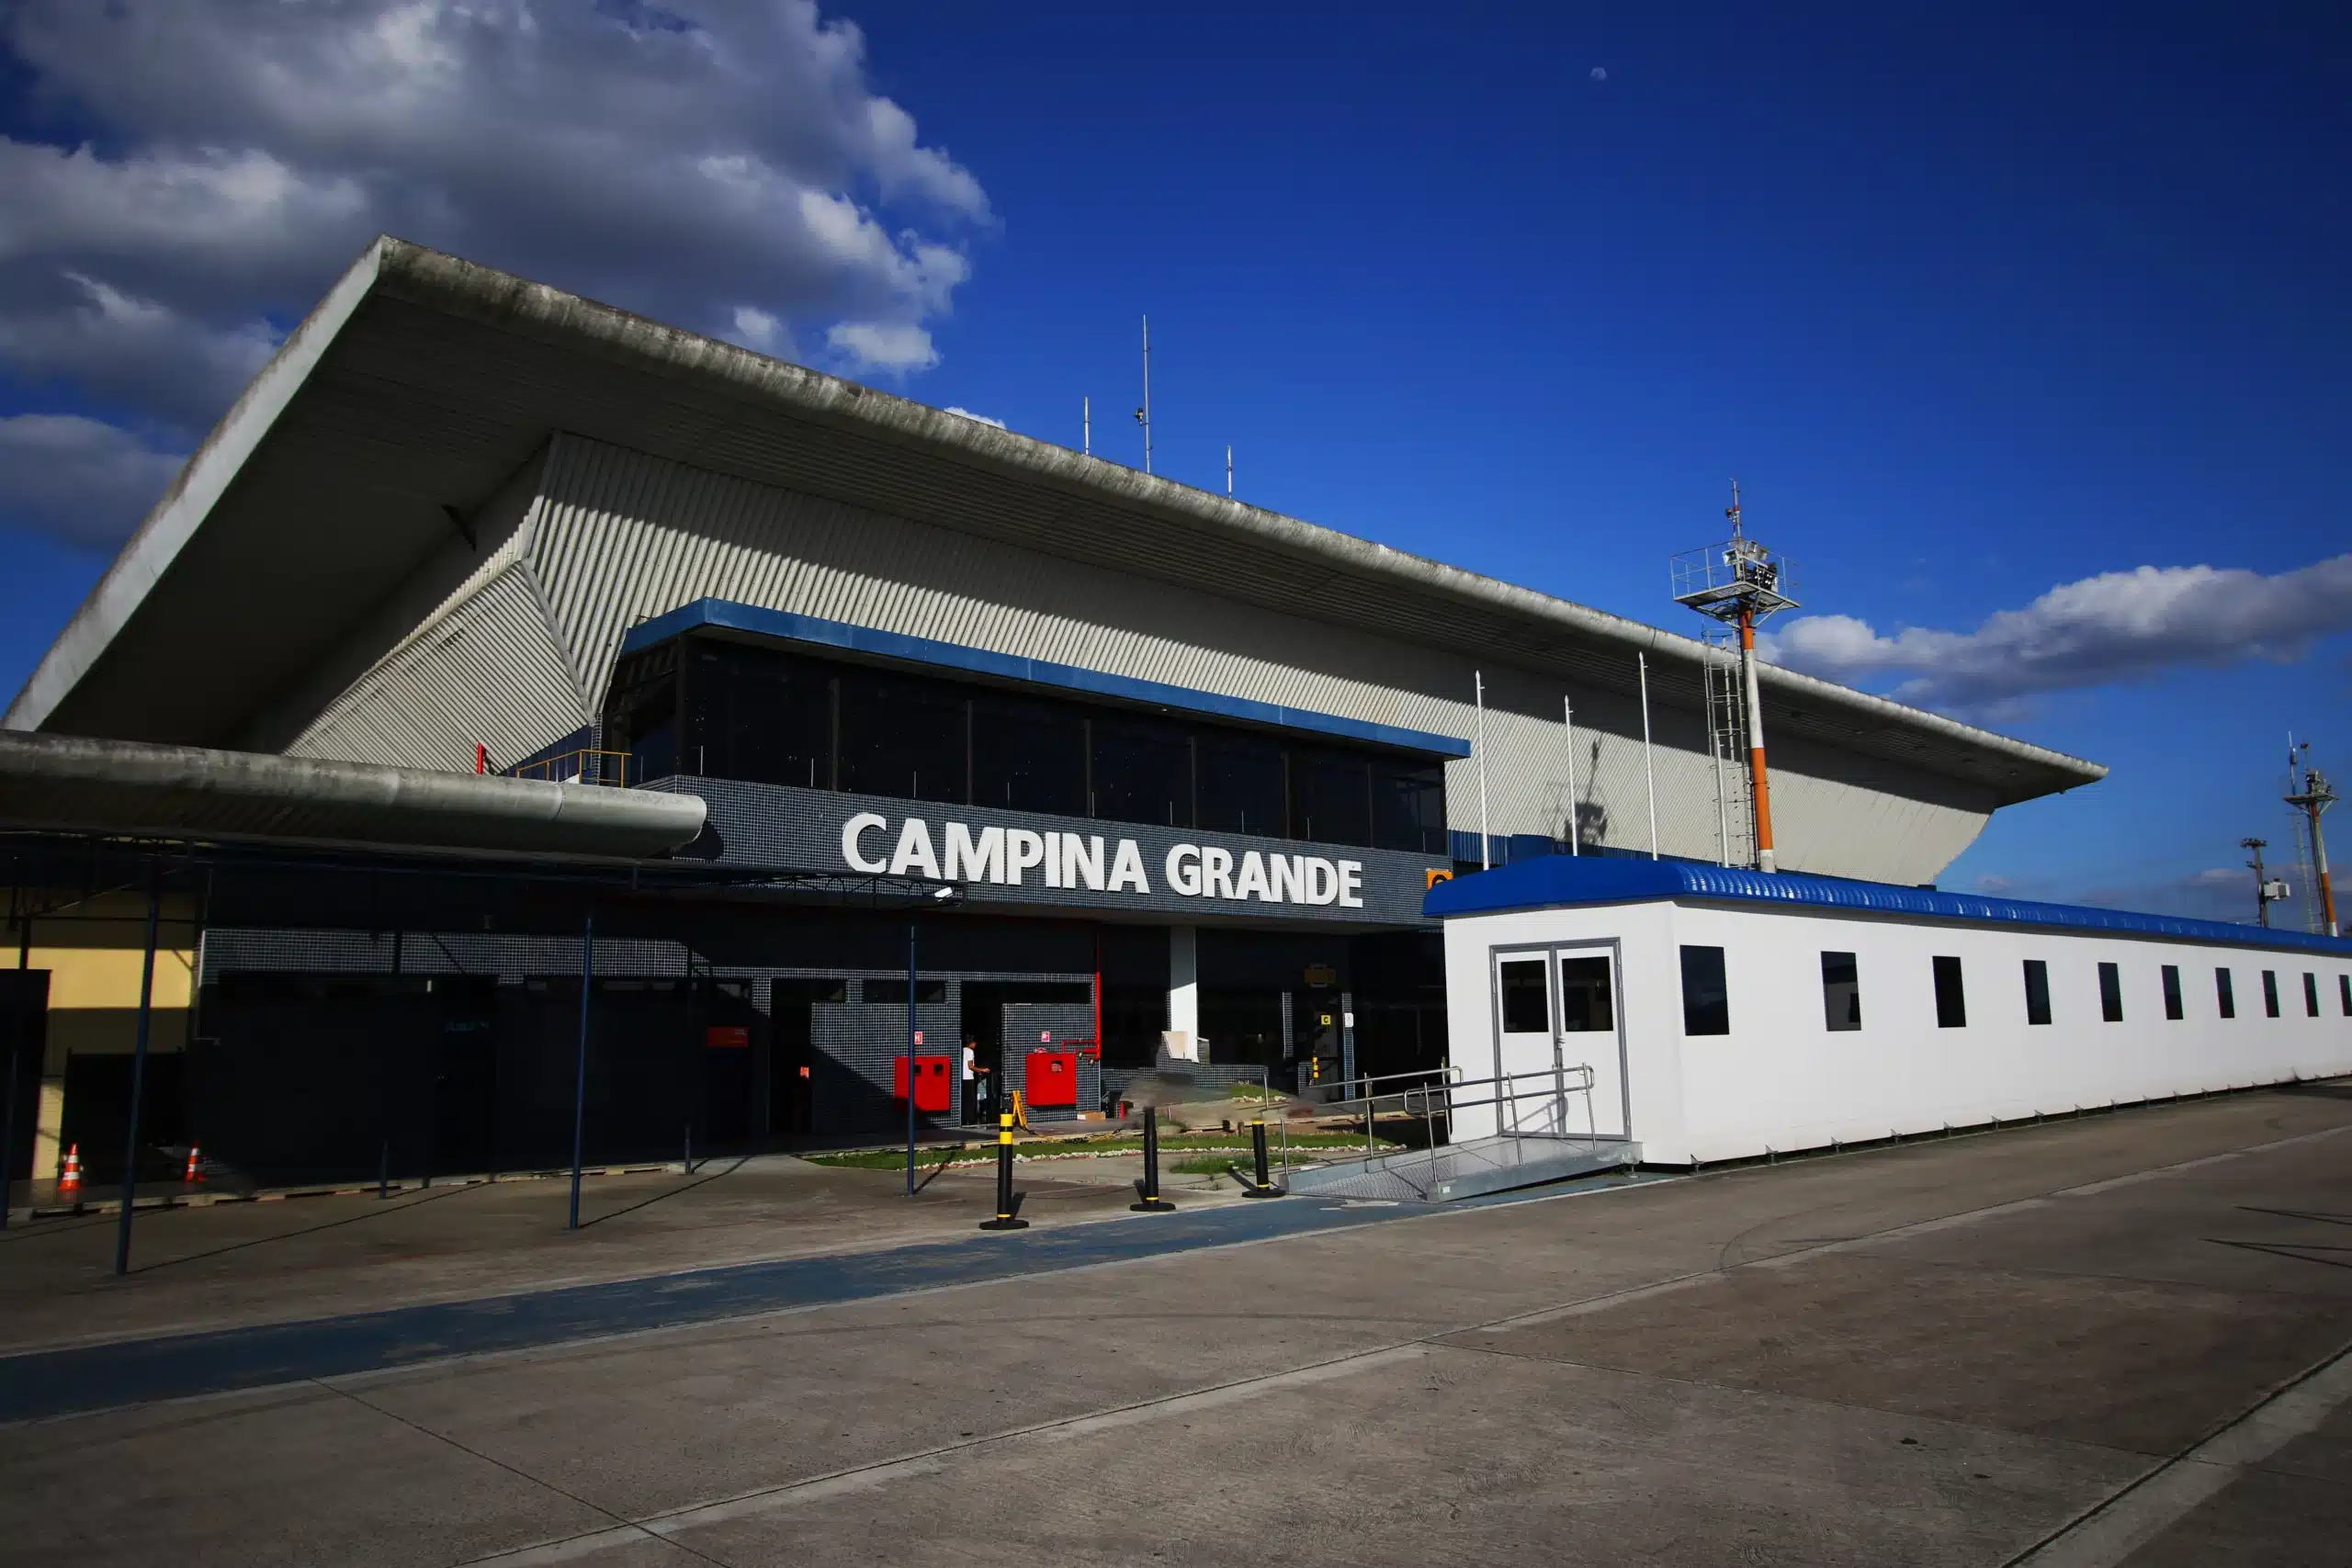 Aeroporto Campina Grande Nordeste Aena Brasil